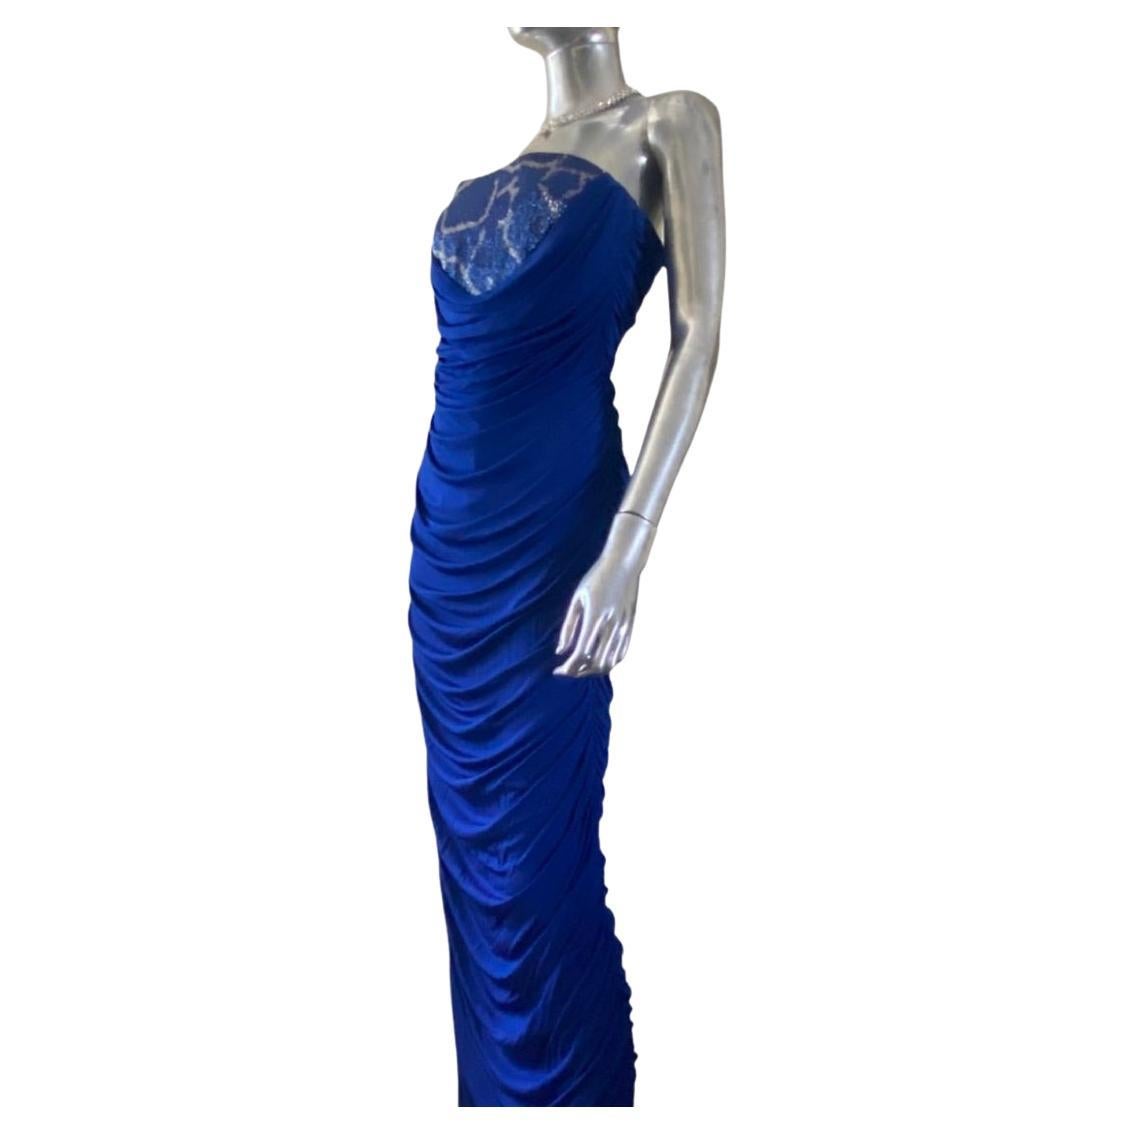 Roberto Cavalli “Mary J Blidge” Royal Blue Draped Jersey Beaded Dress Size 6 For Sale